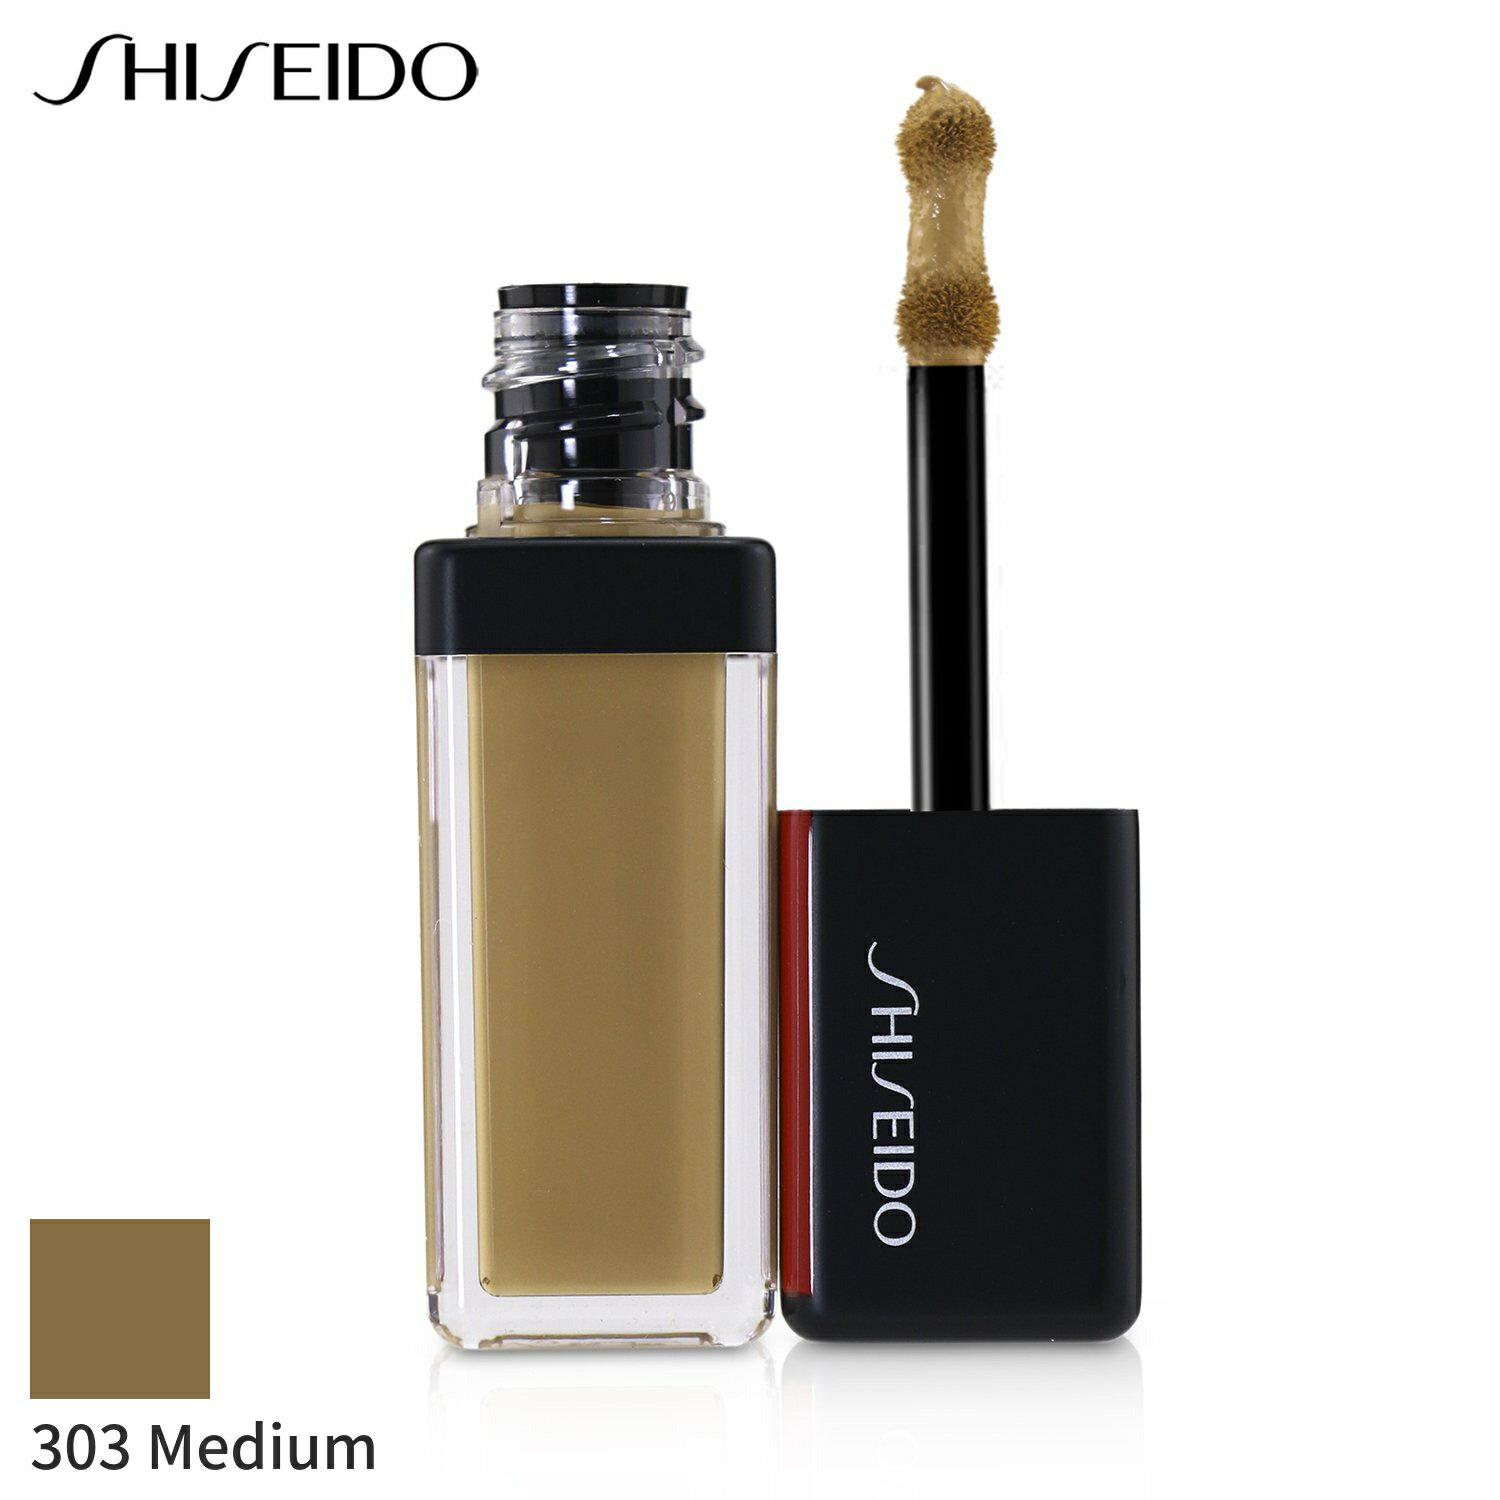  RV[[ Shiseido VN XL Zt tbVO - # 303 Medium 5.8ml CNAbv tFCX N} ̓ v[g Mtg 2024 lC uh RX